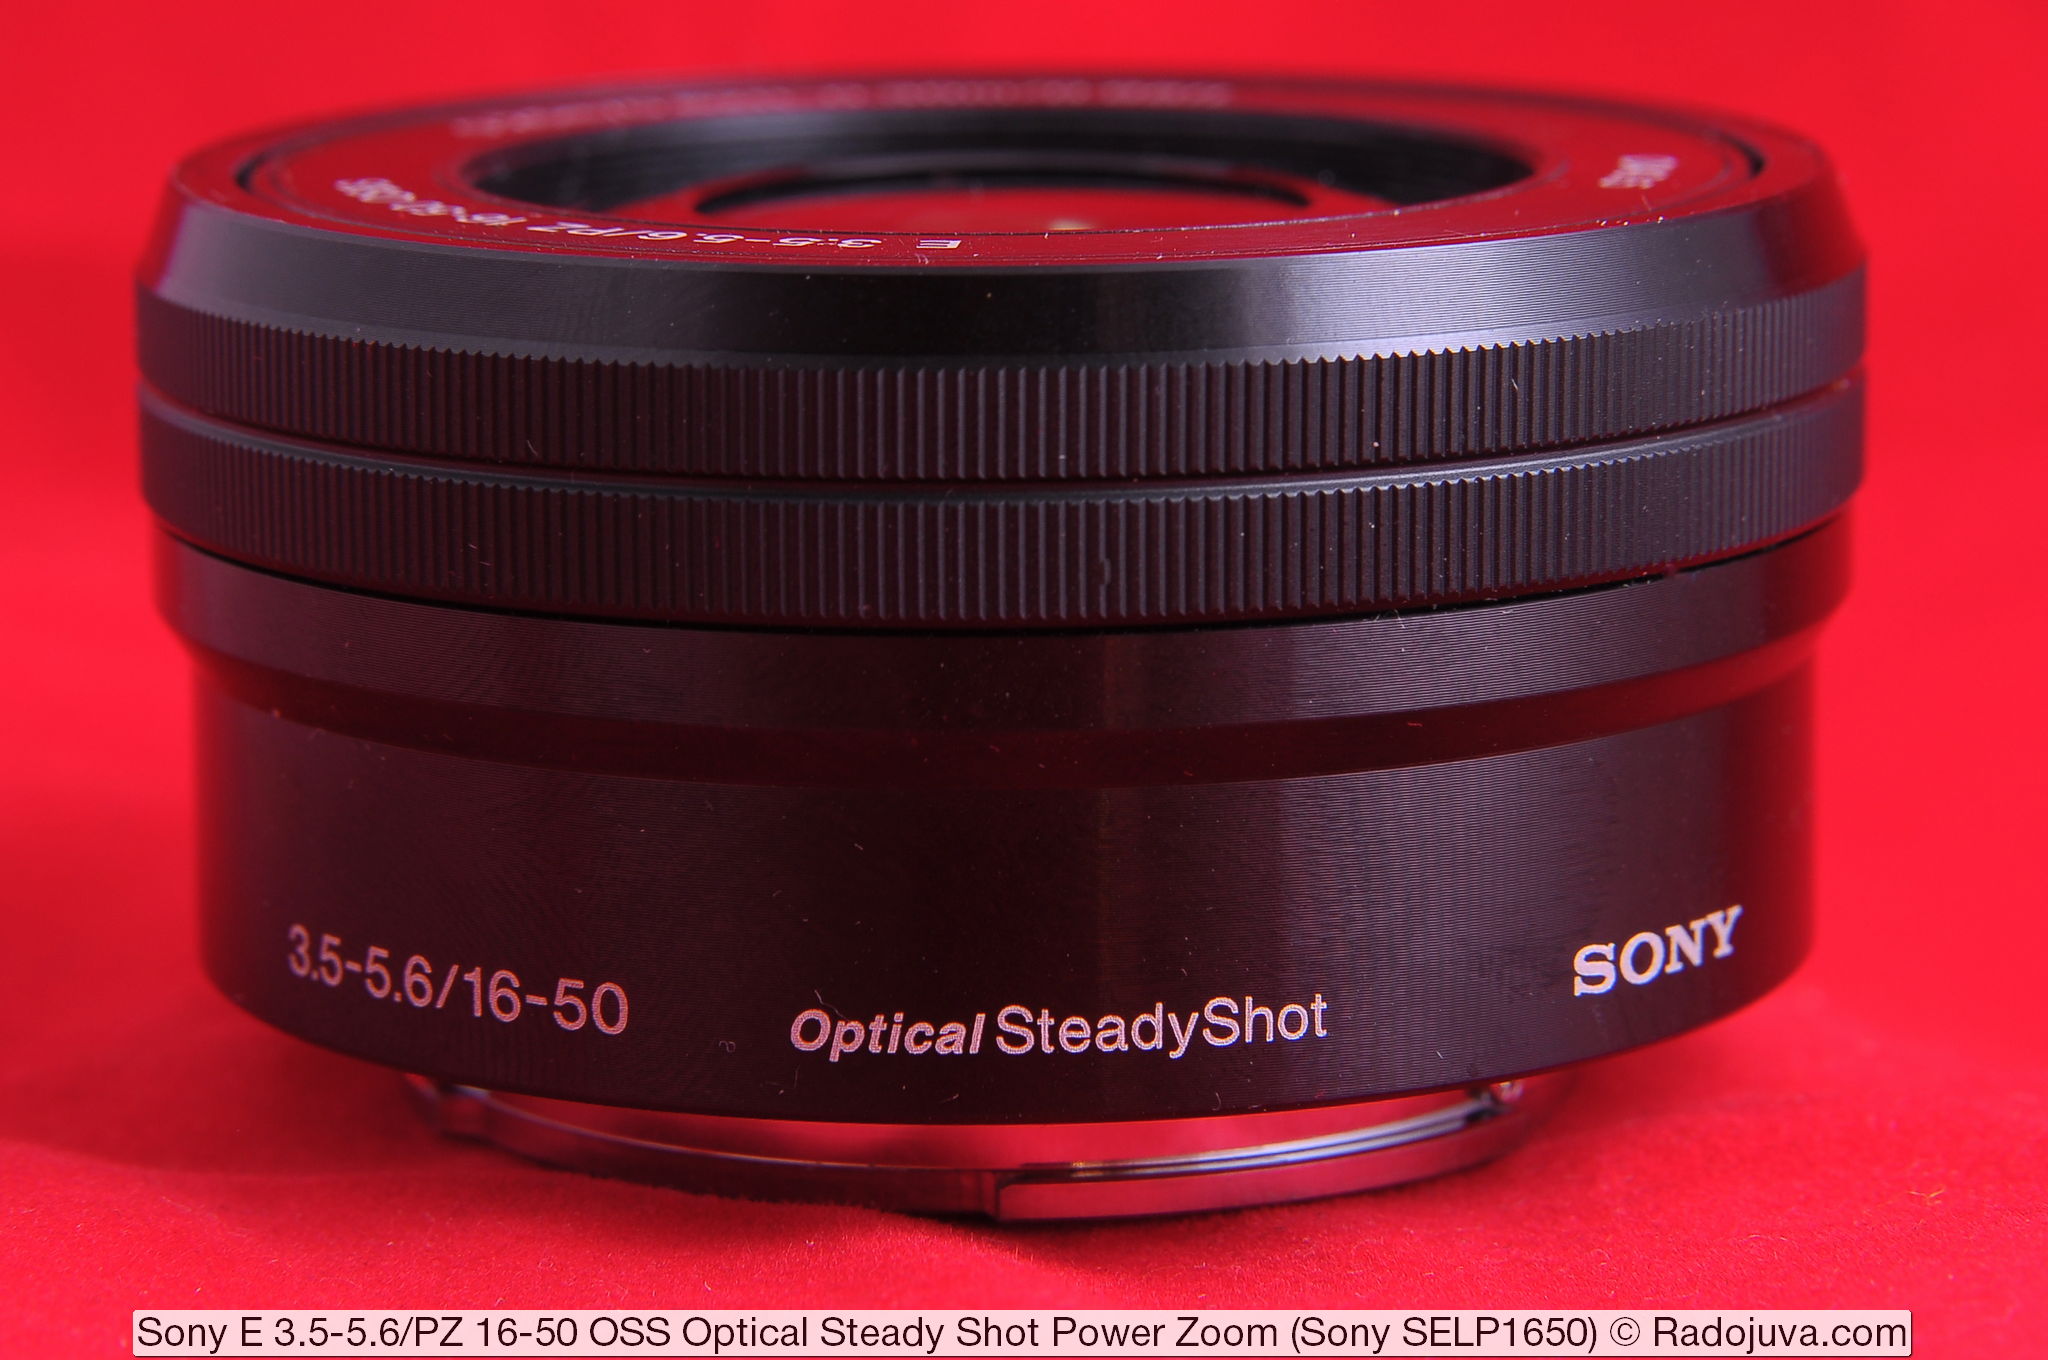 Sony E 3.5-5.6/PZ 16-50 OSS Optical Steady Shot Power Zoom (Sony SELP1650)